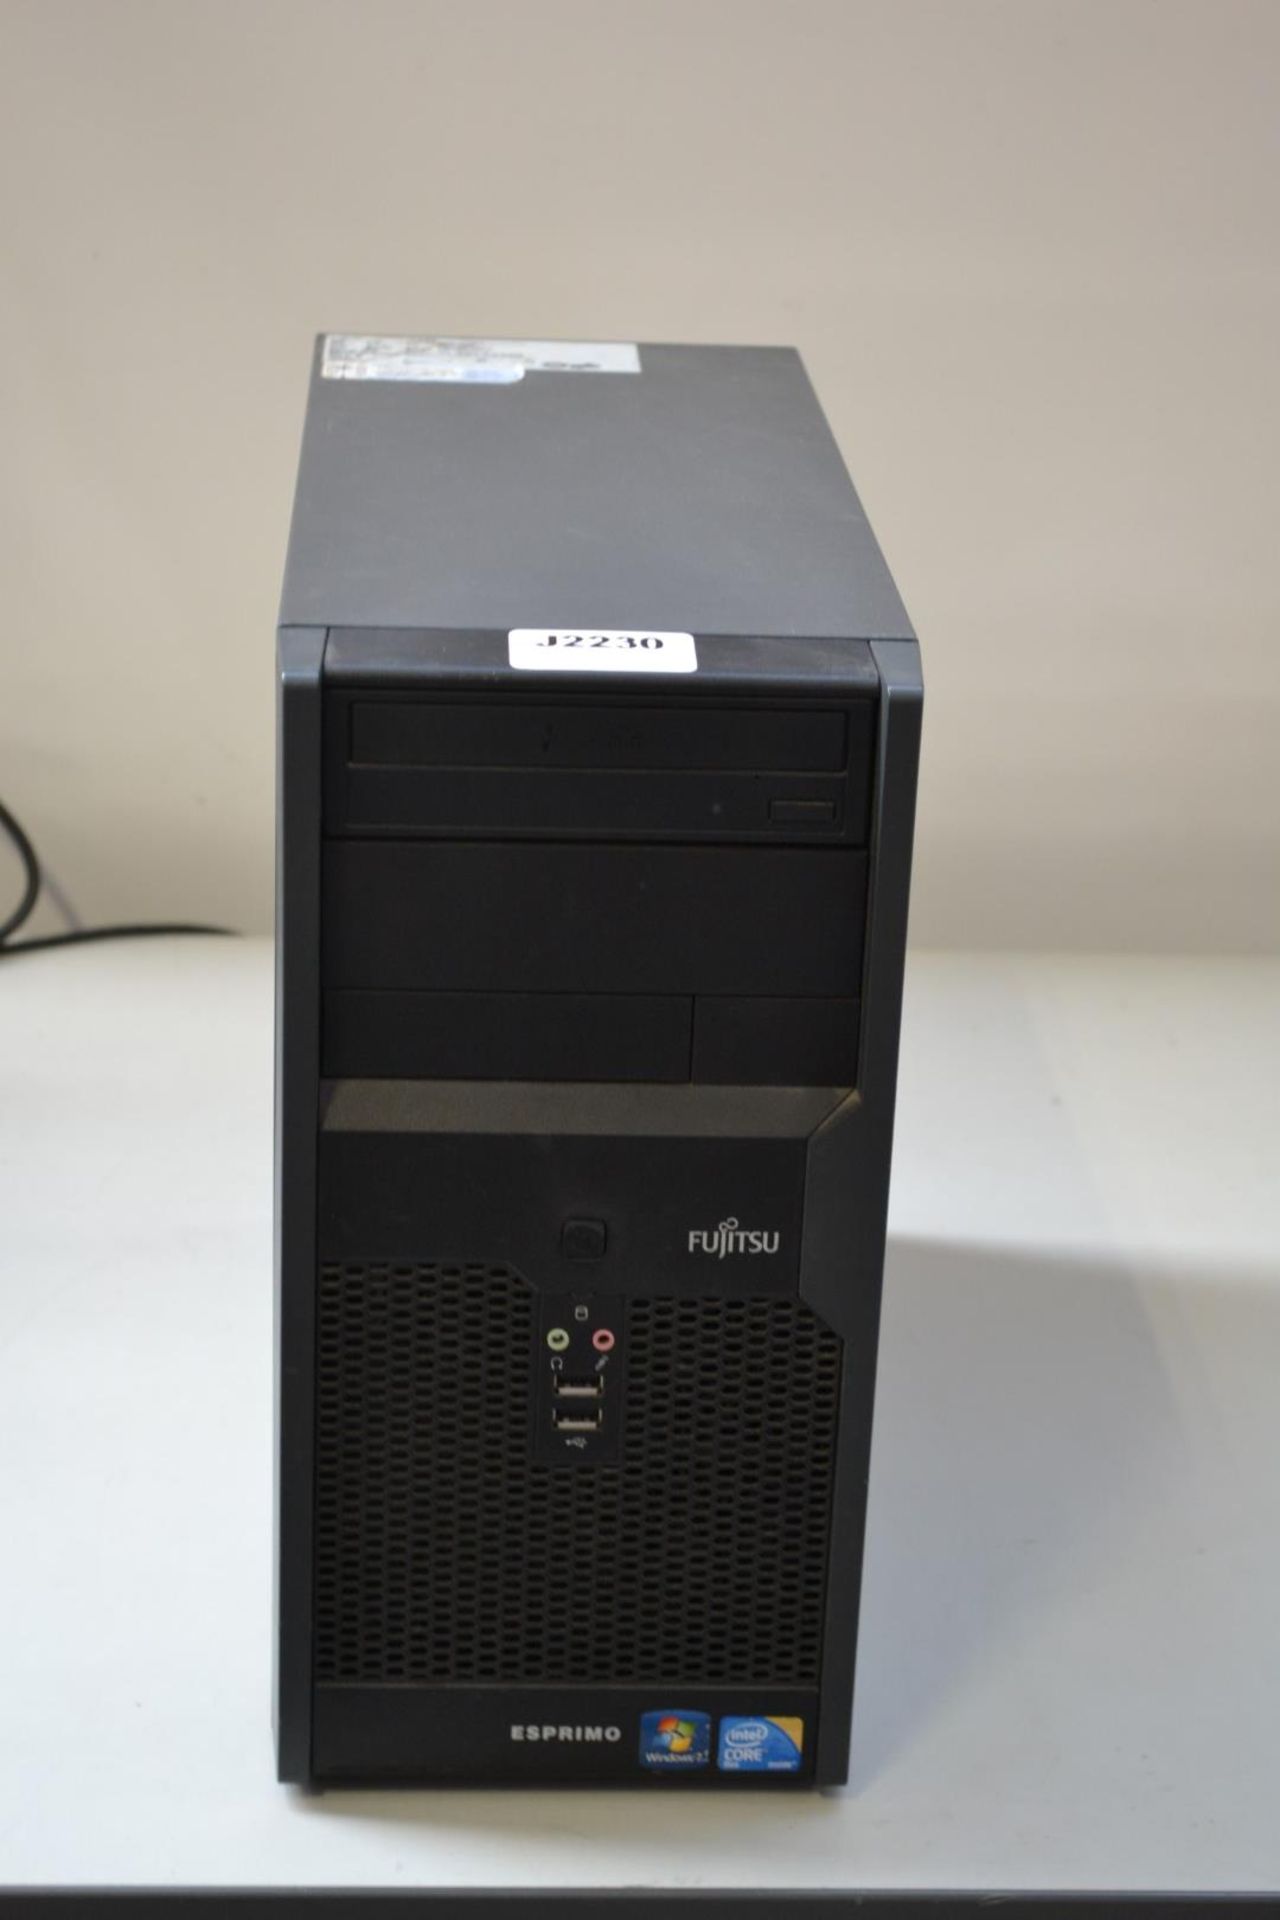 1 x Fujitsu Esprimo P2560 Desktop COMPUTER - Ref J2230